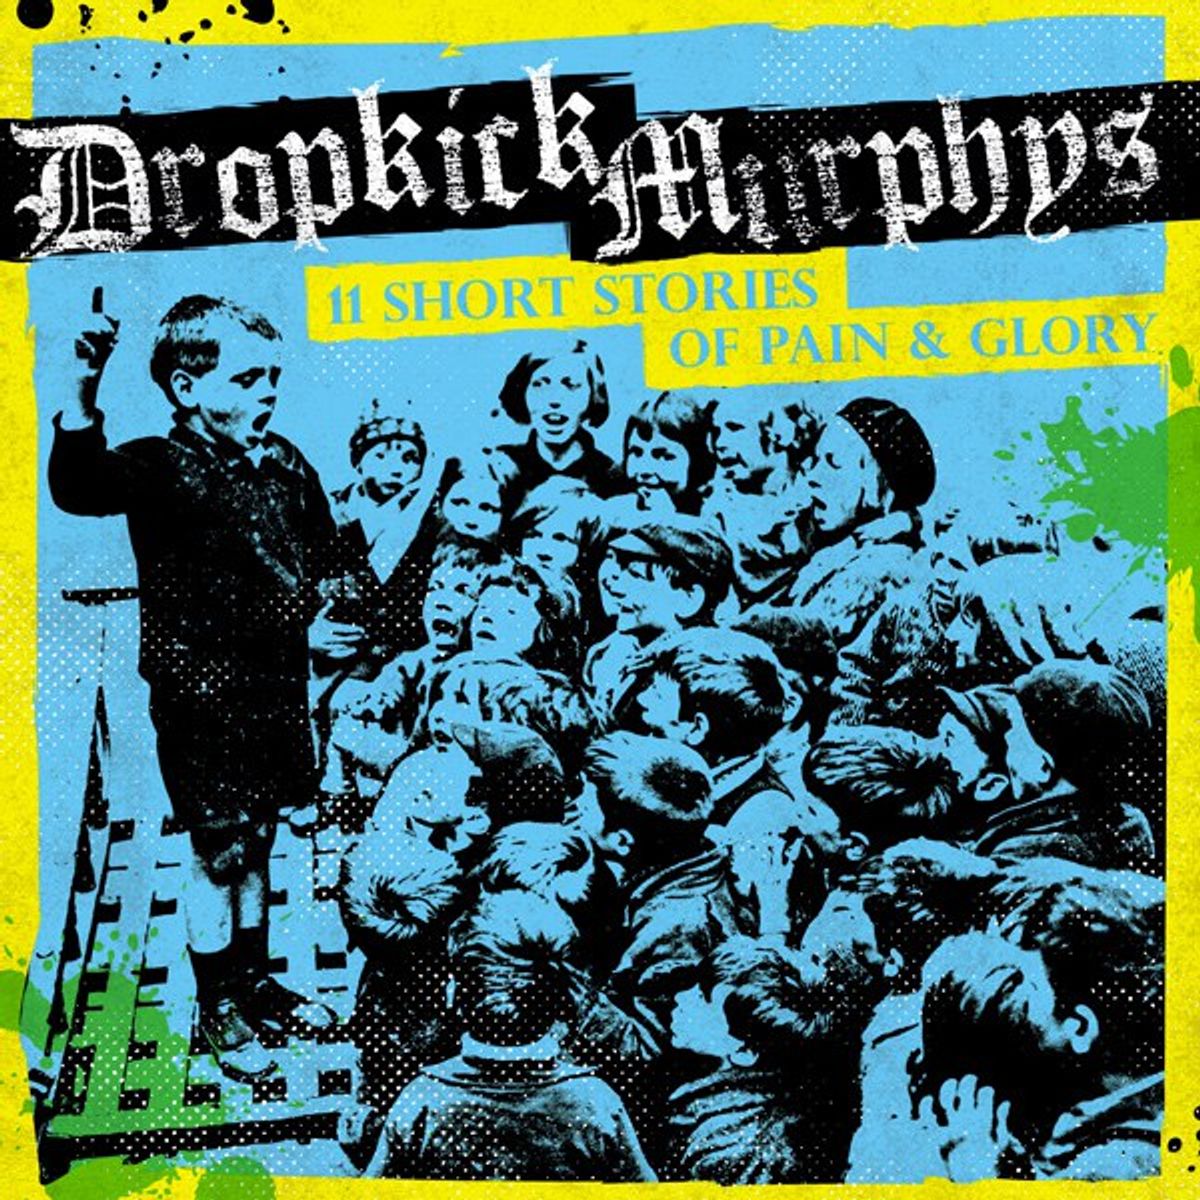 Dropkick Murphy's- 11 Short Stories of Pain and Glory: Album Review